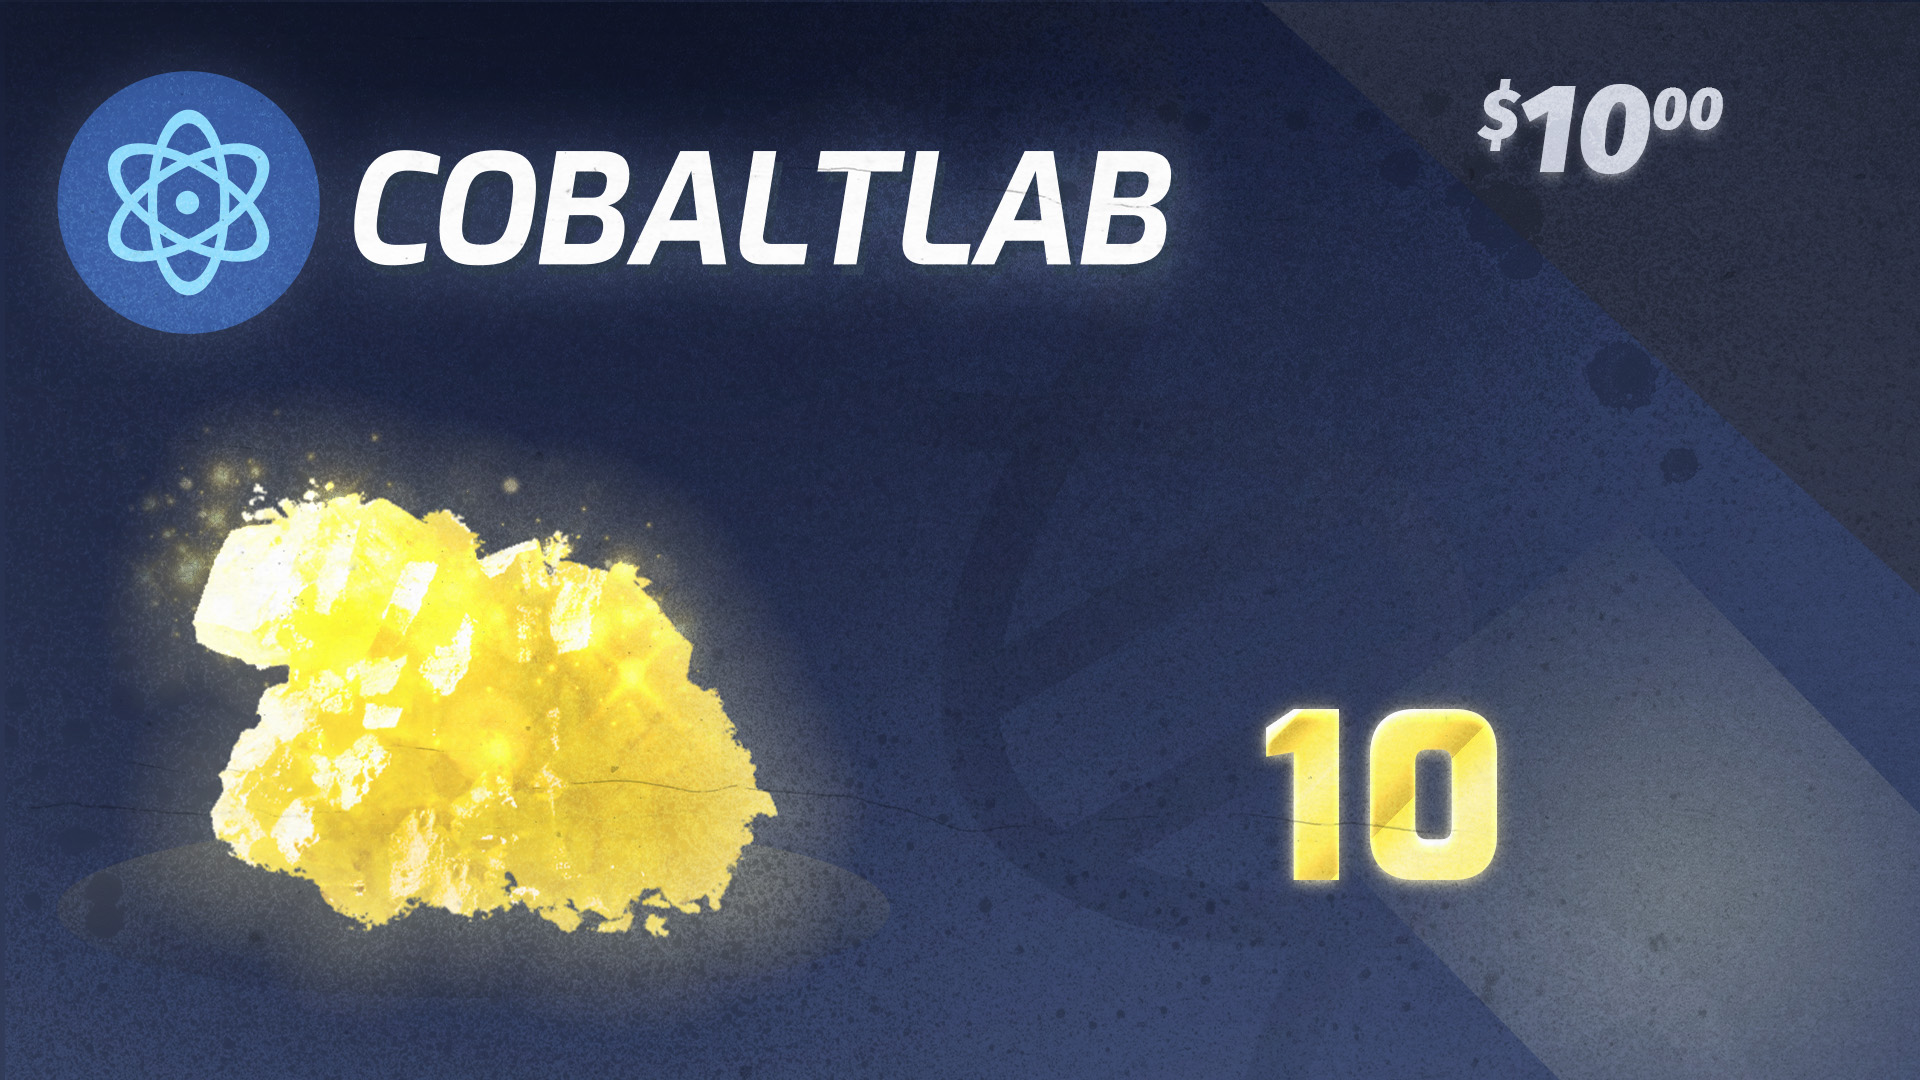 Cobaltlab.tech 10 Sulfur Gift Card